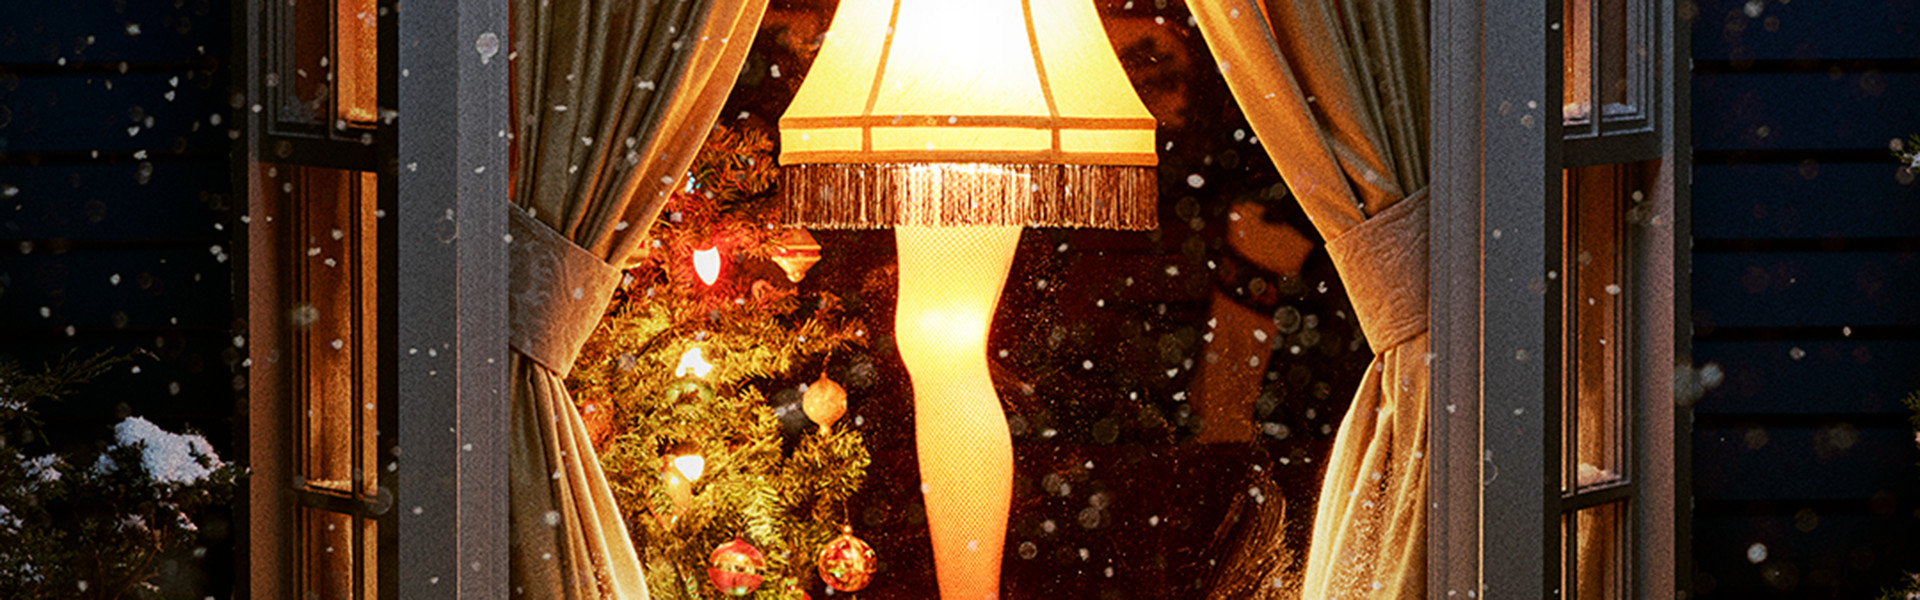 20 Christmas Story Leg Lamp
 Fox to Construct 20 Foot Leg Lamp for ‘A Christmas Story